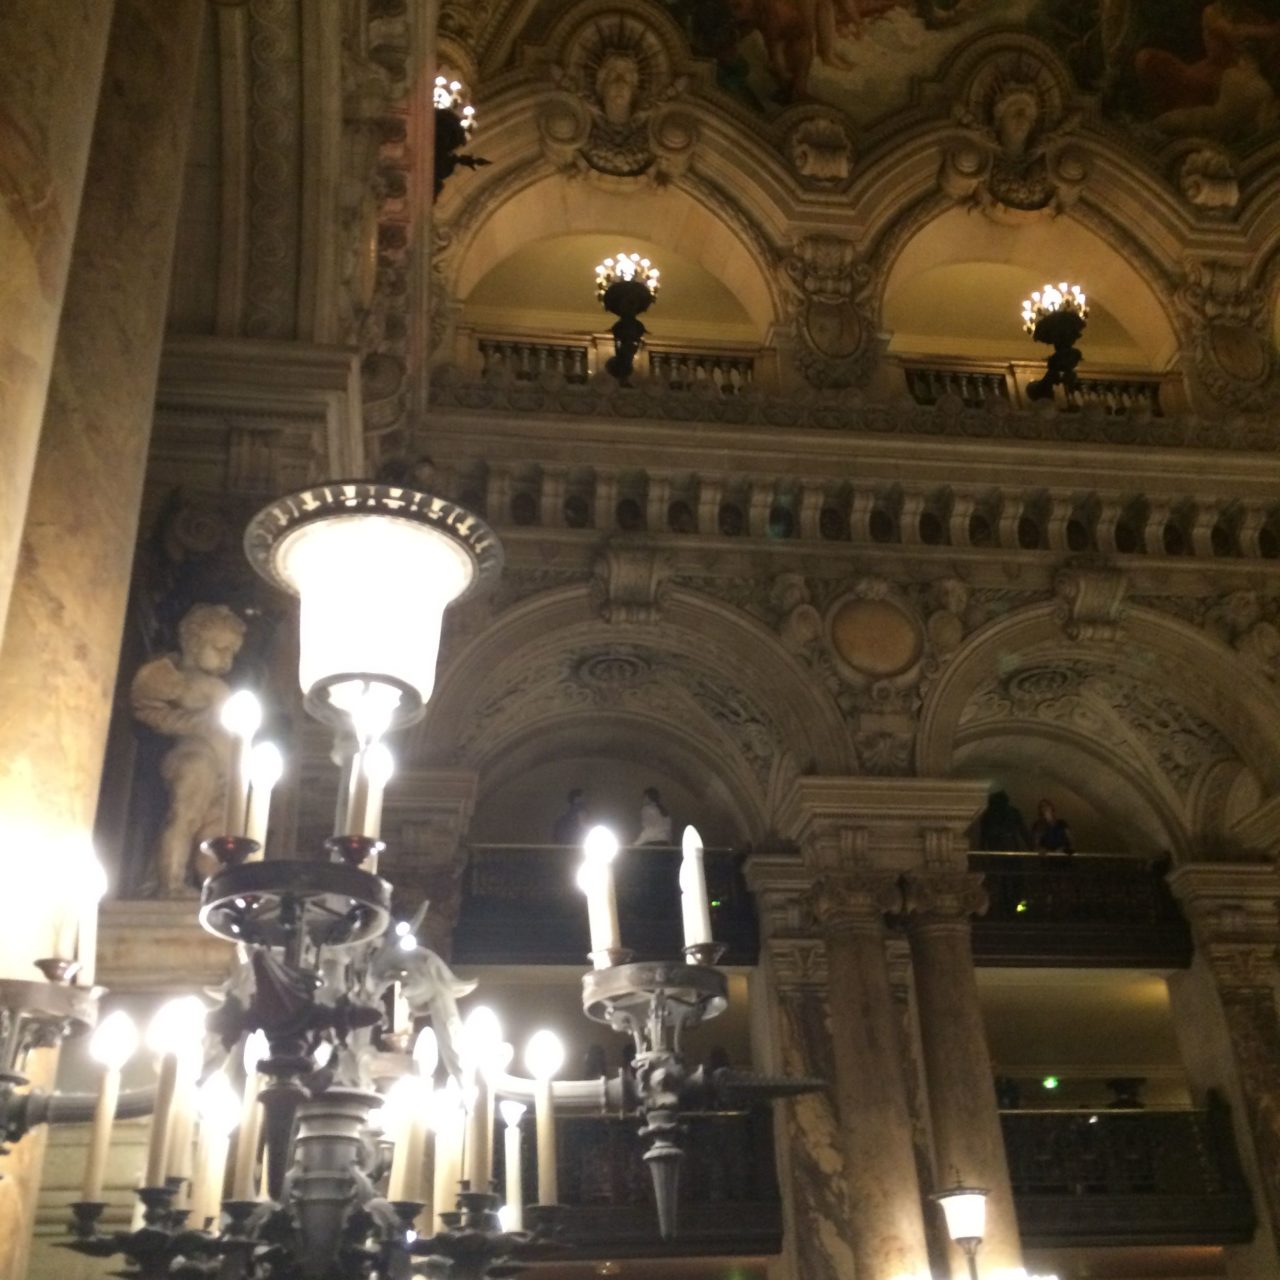 Paris, Garnier, foyer, lights, chandelier, opera, opera house, interior, music, culture, history, Europe, Paris, France, architecture